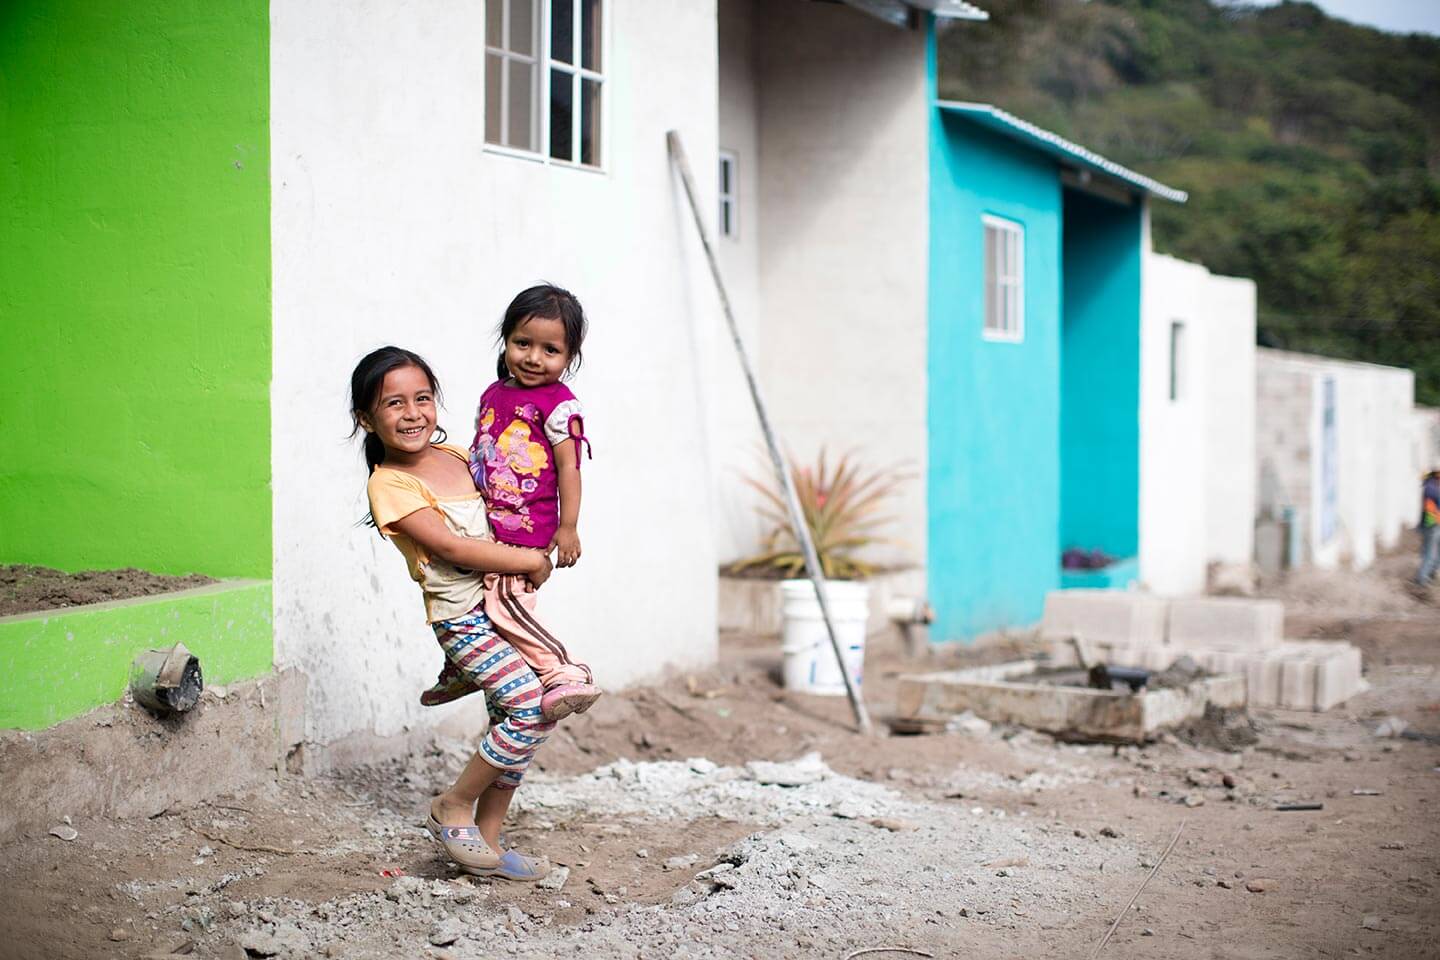 A family celebrates their new home in El Salvador.